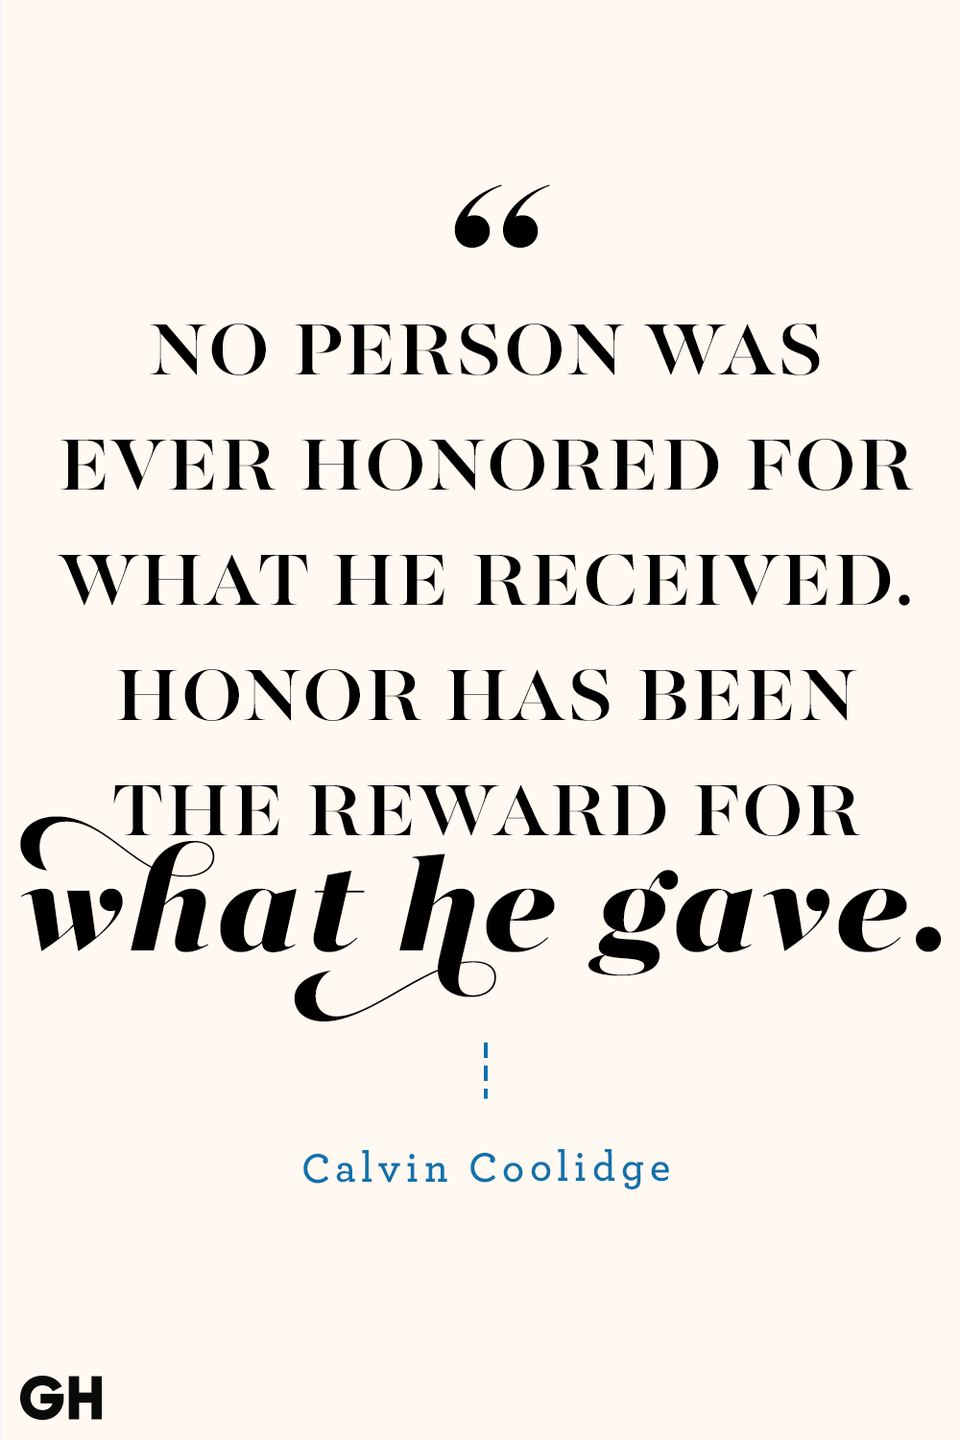 1) Calvin Coolidge